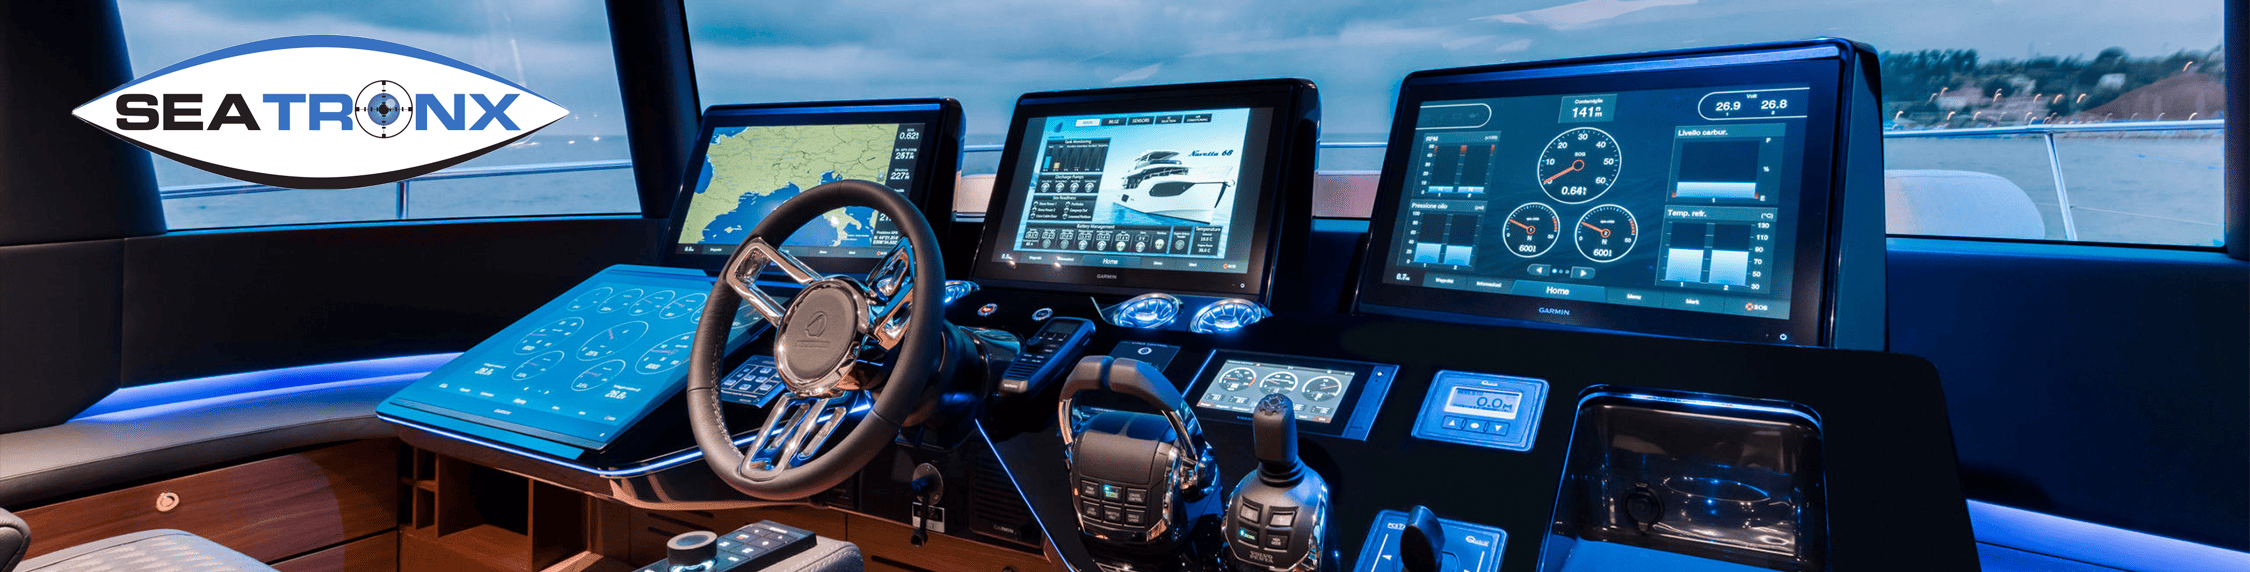 Seatronx Marine Displays & Monitors | Rugged, Innovative Technology